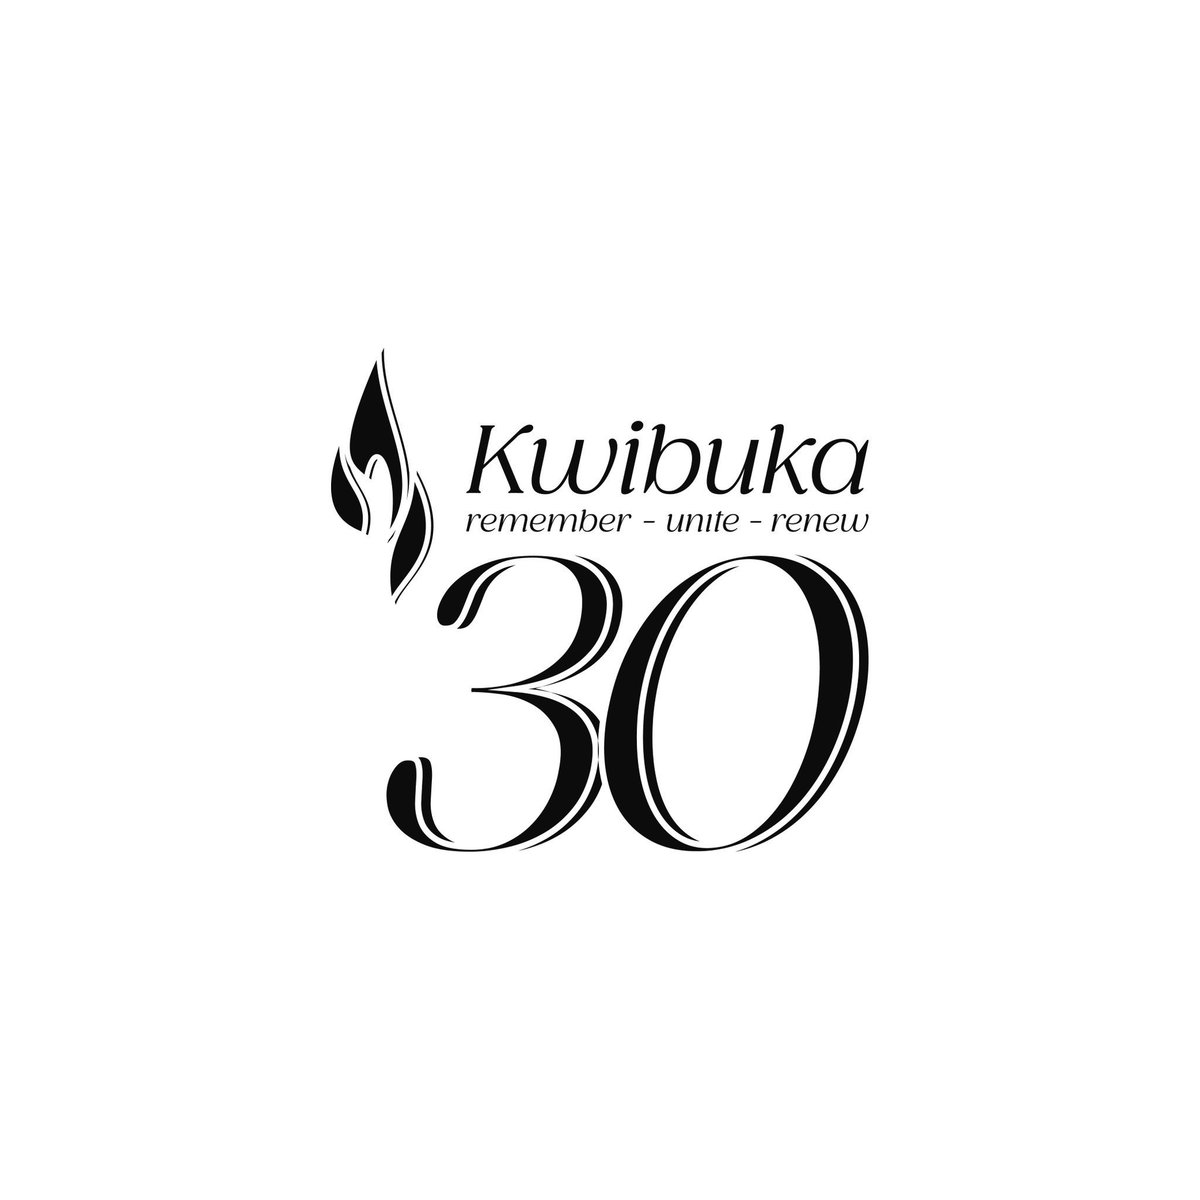 'Remember, unite, renew.' #Kwibuka30